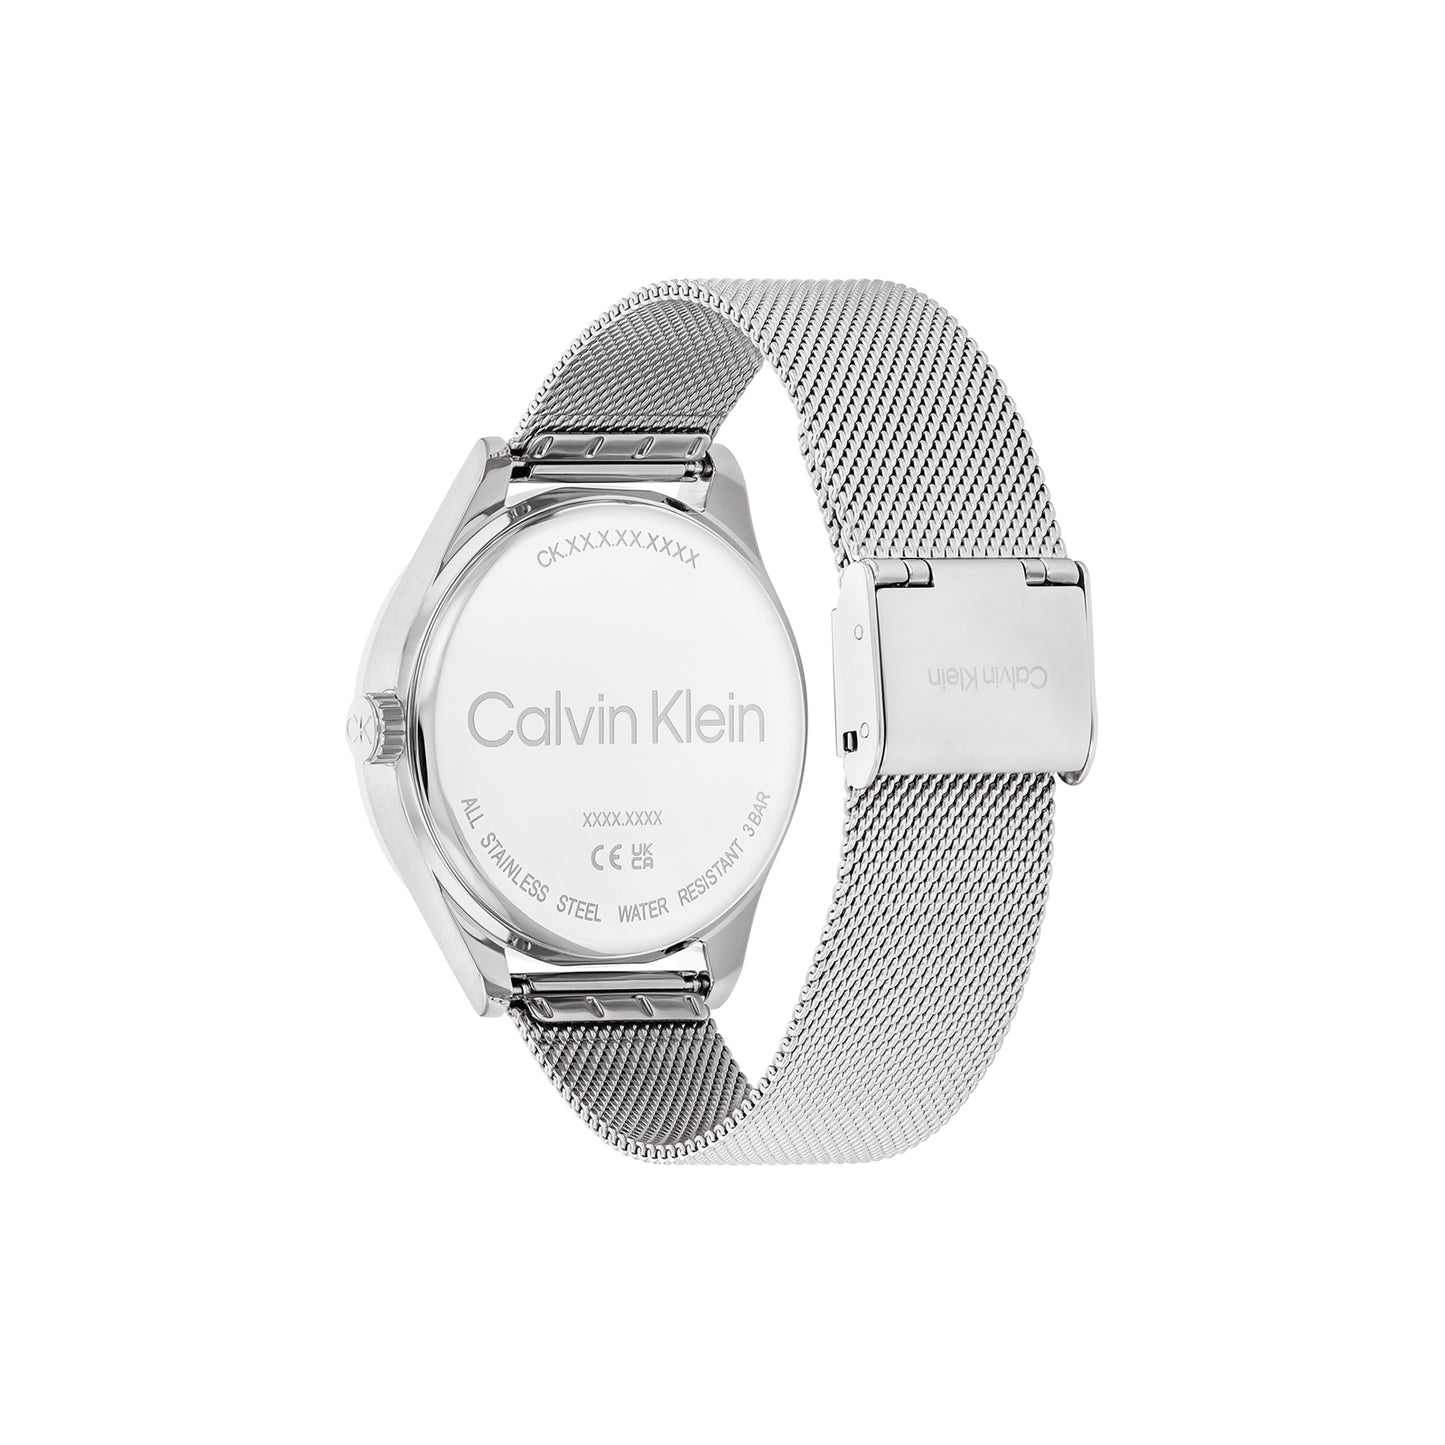 Calvin Klein 25100010 Women's Steel Mesh Watch